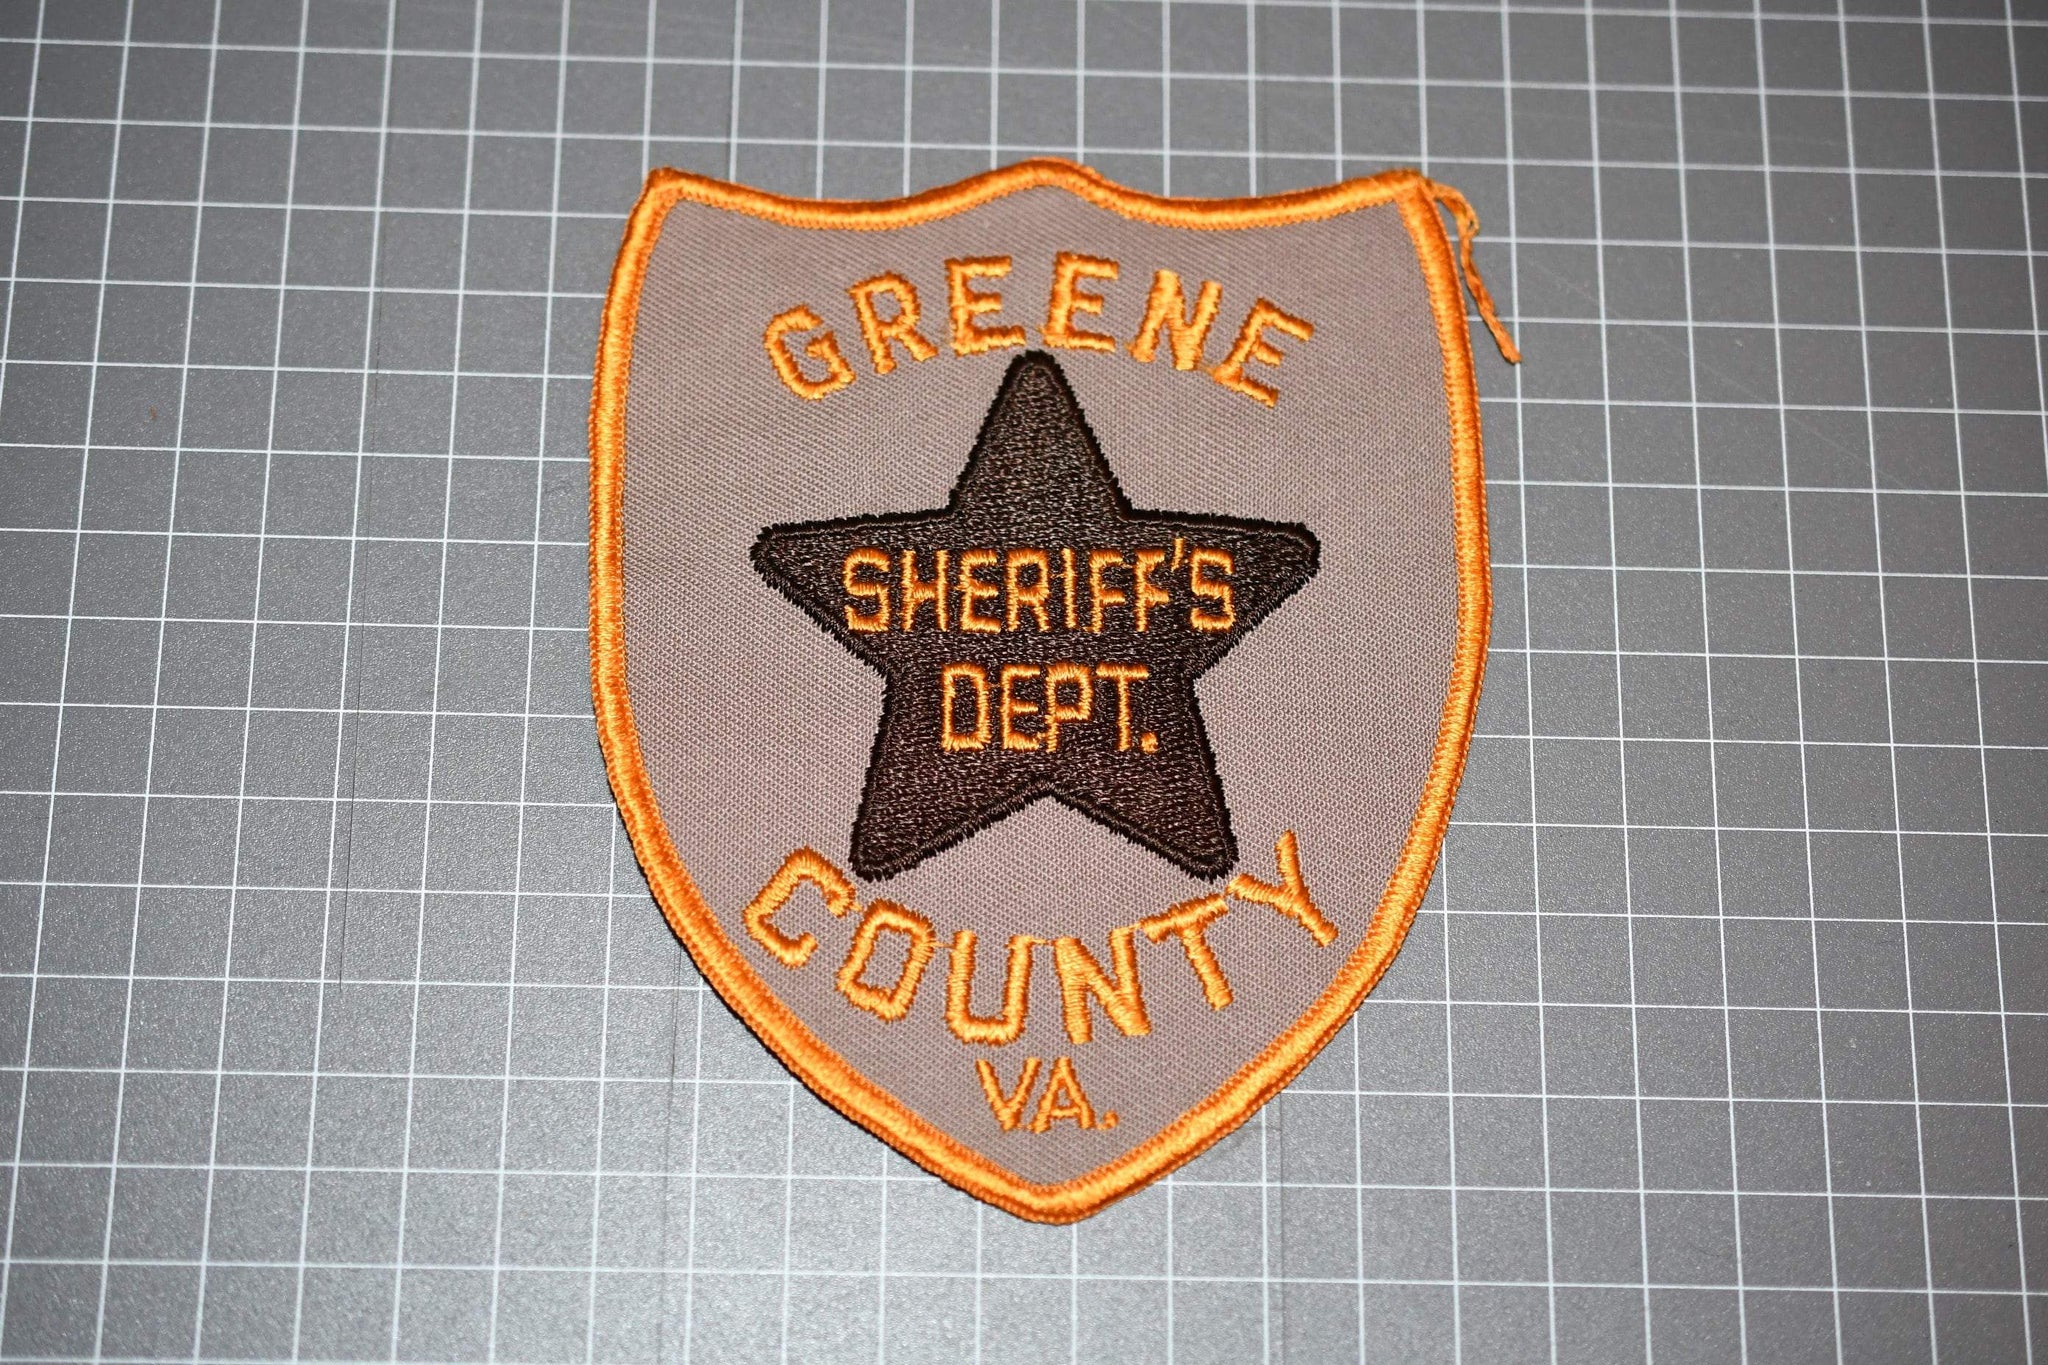 Greene County Virginia Sheriff's Department Patch (B1)